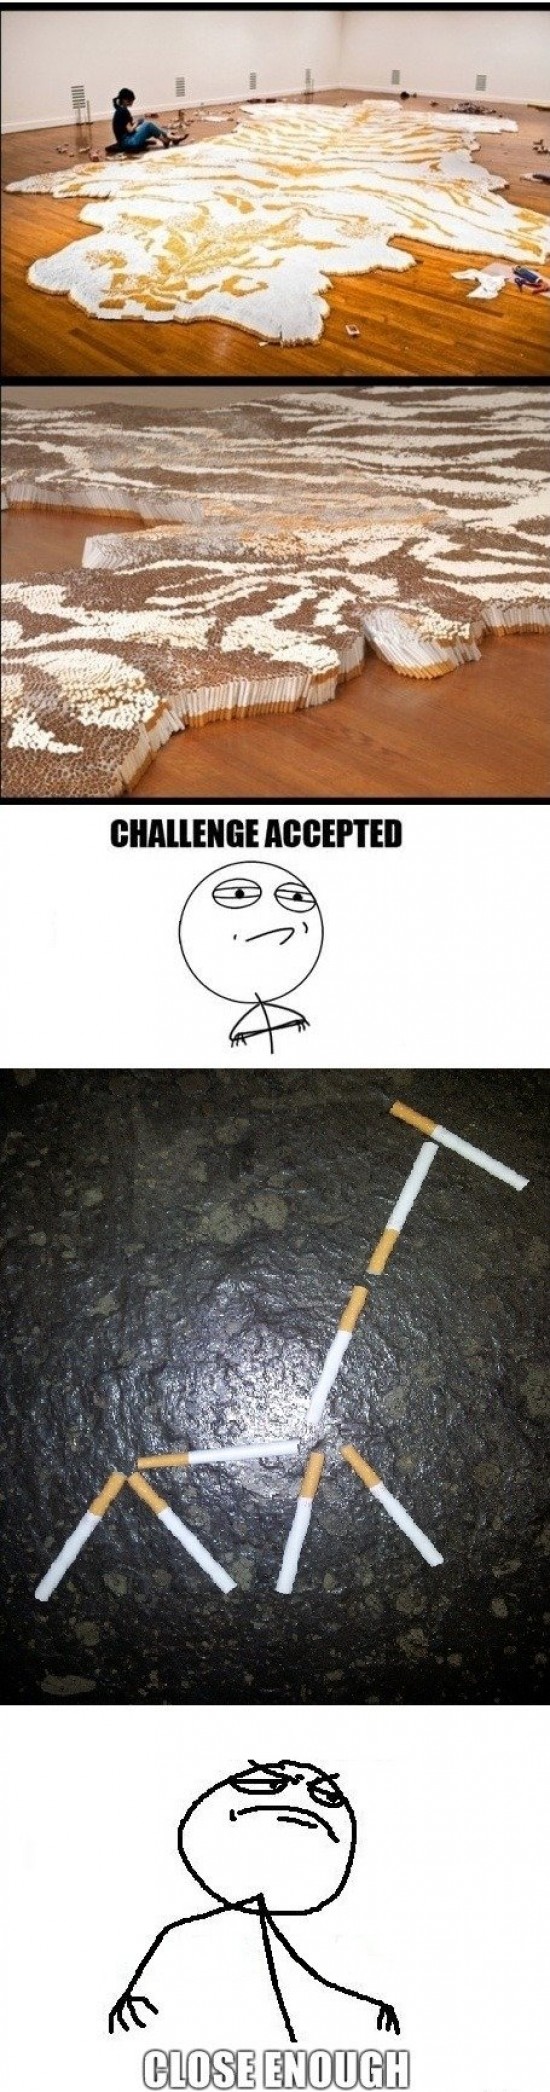 challenge accepted,cigarrillos,close enough,tigre